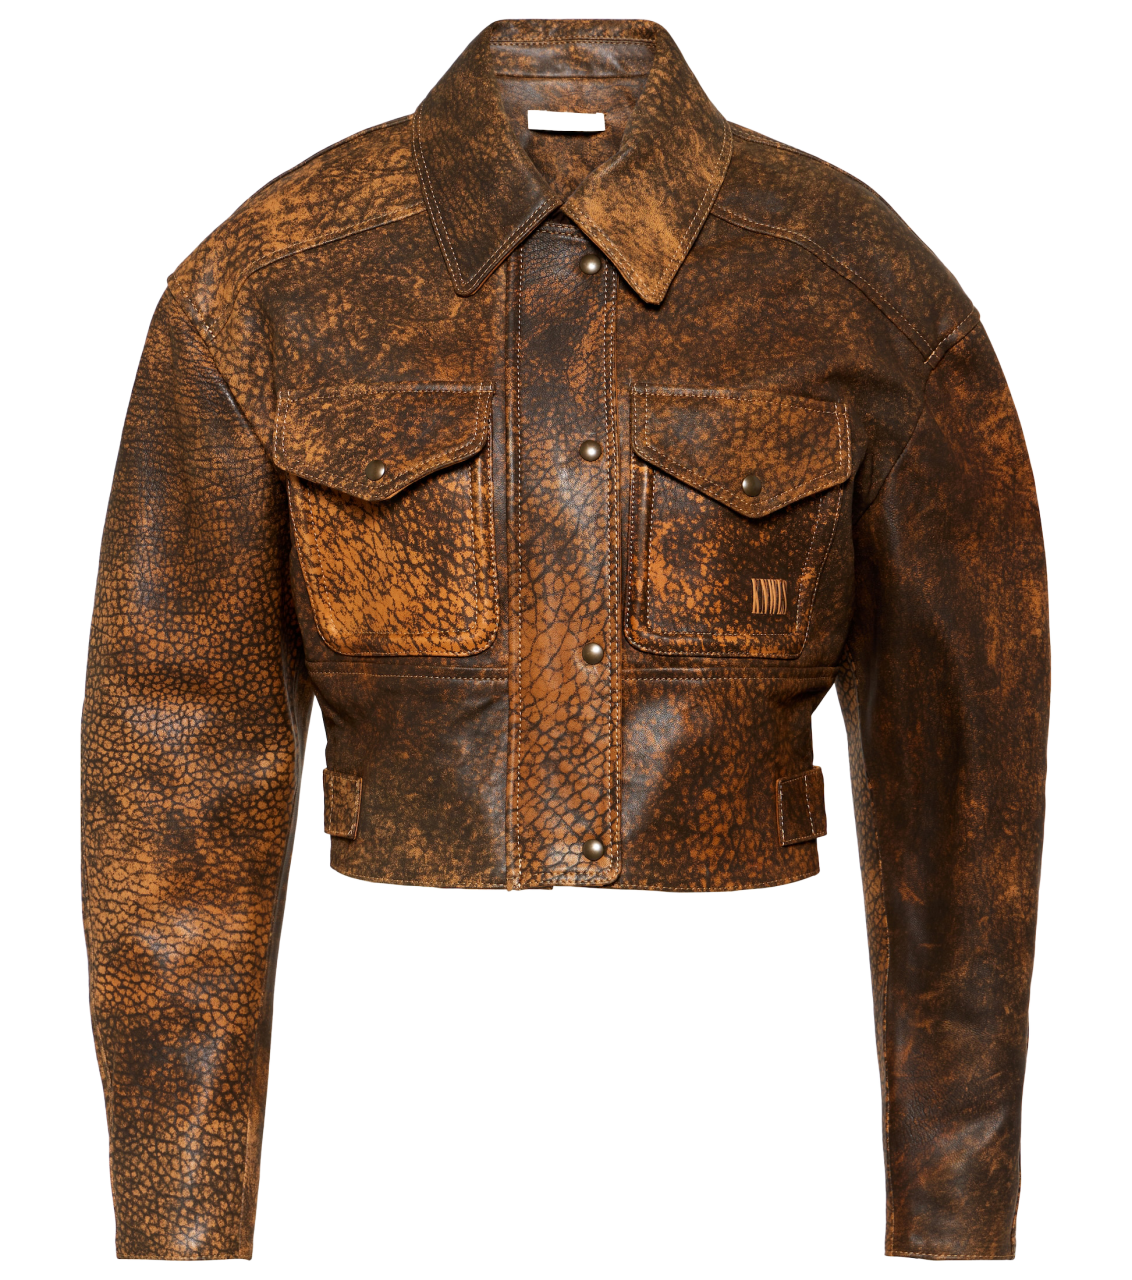 KNWLS Distressed Leather Jacket 1132x1280 